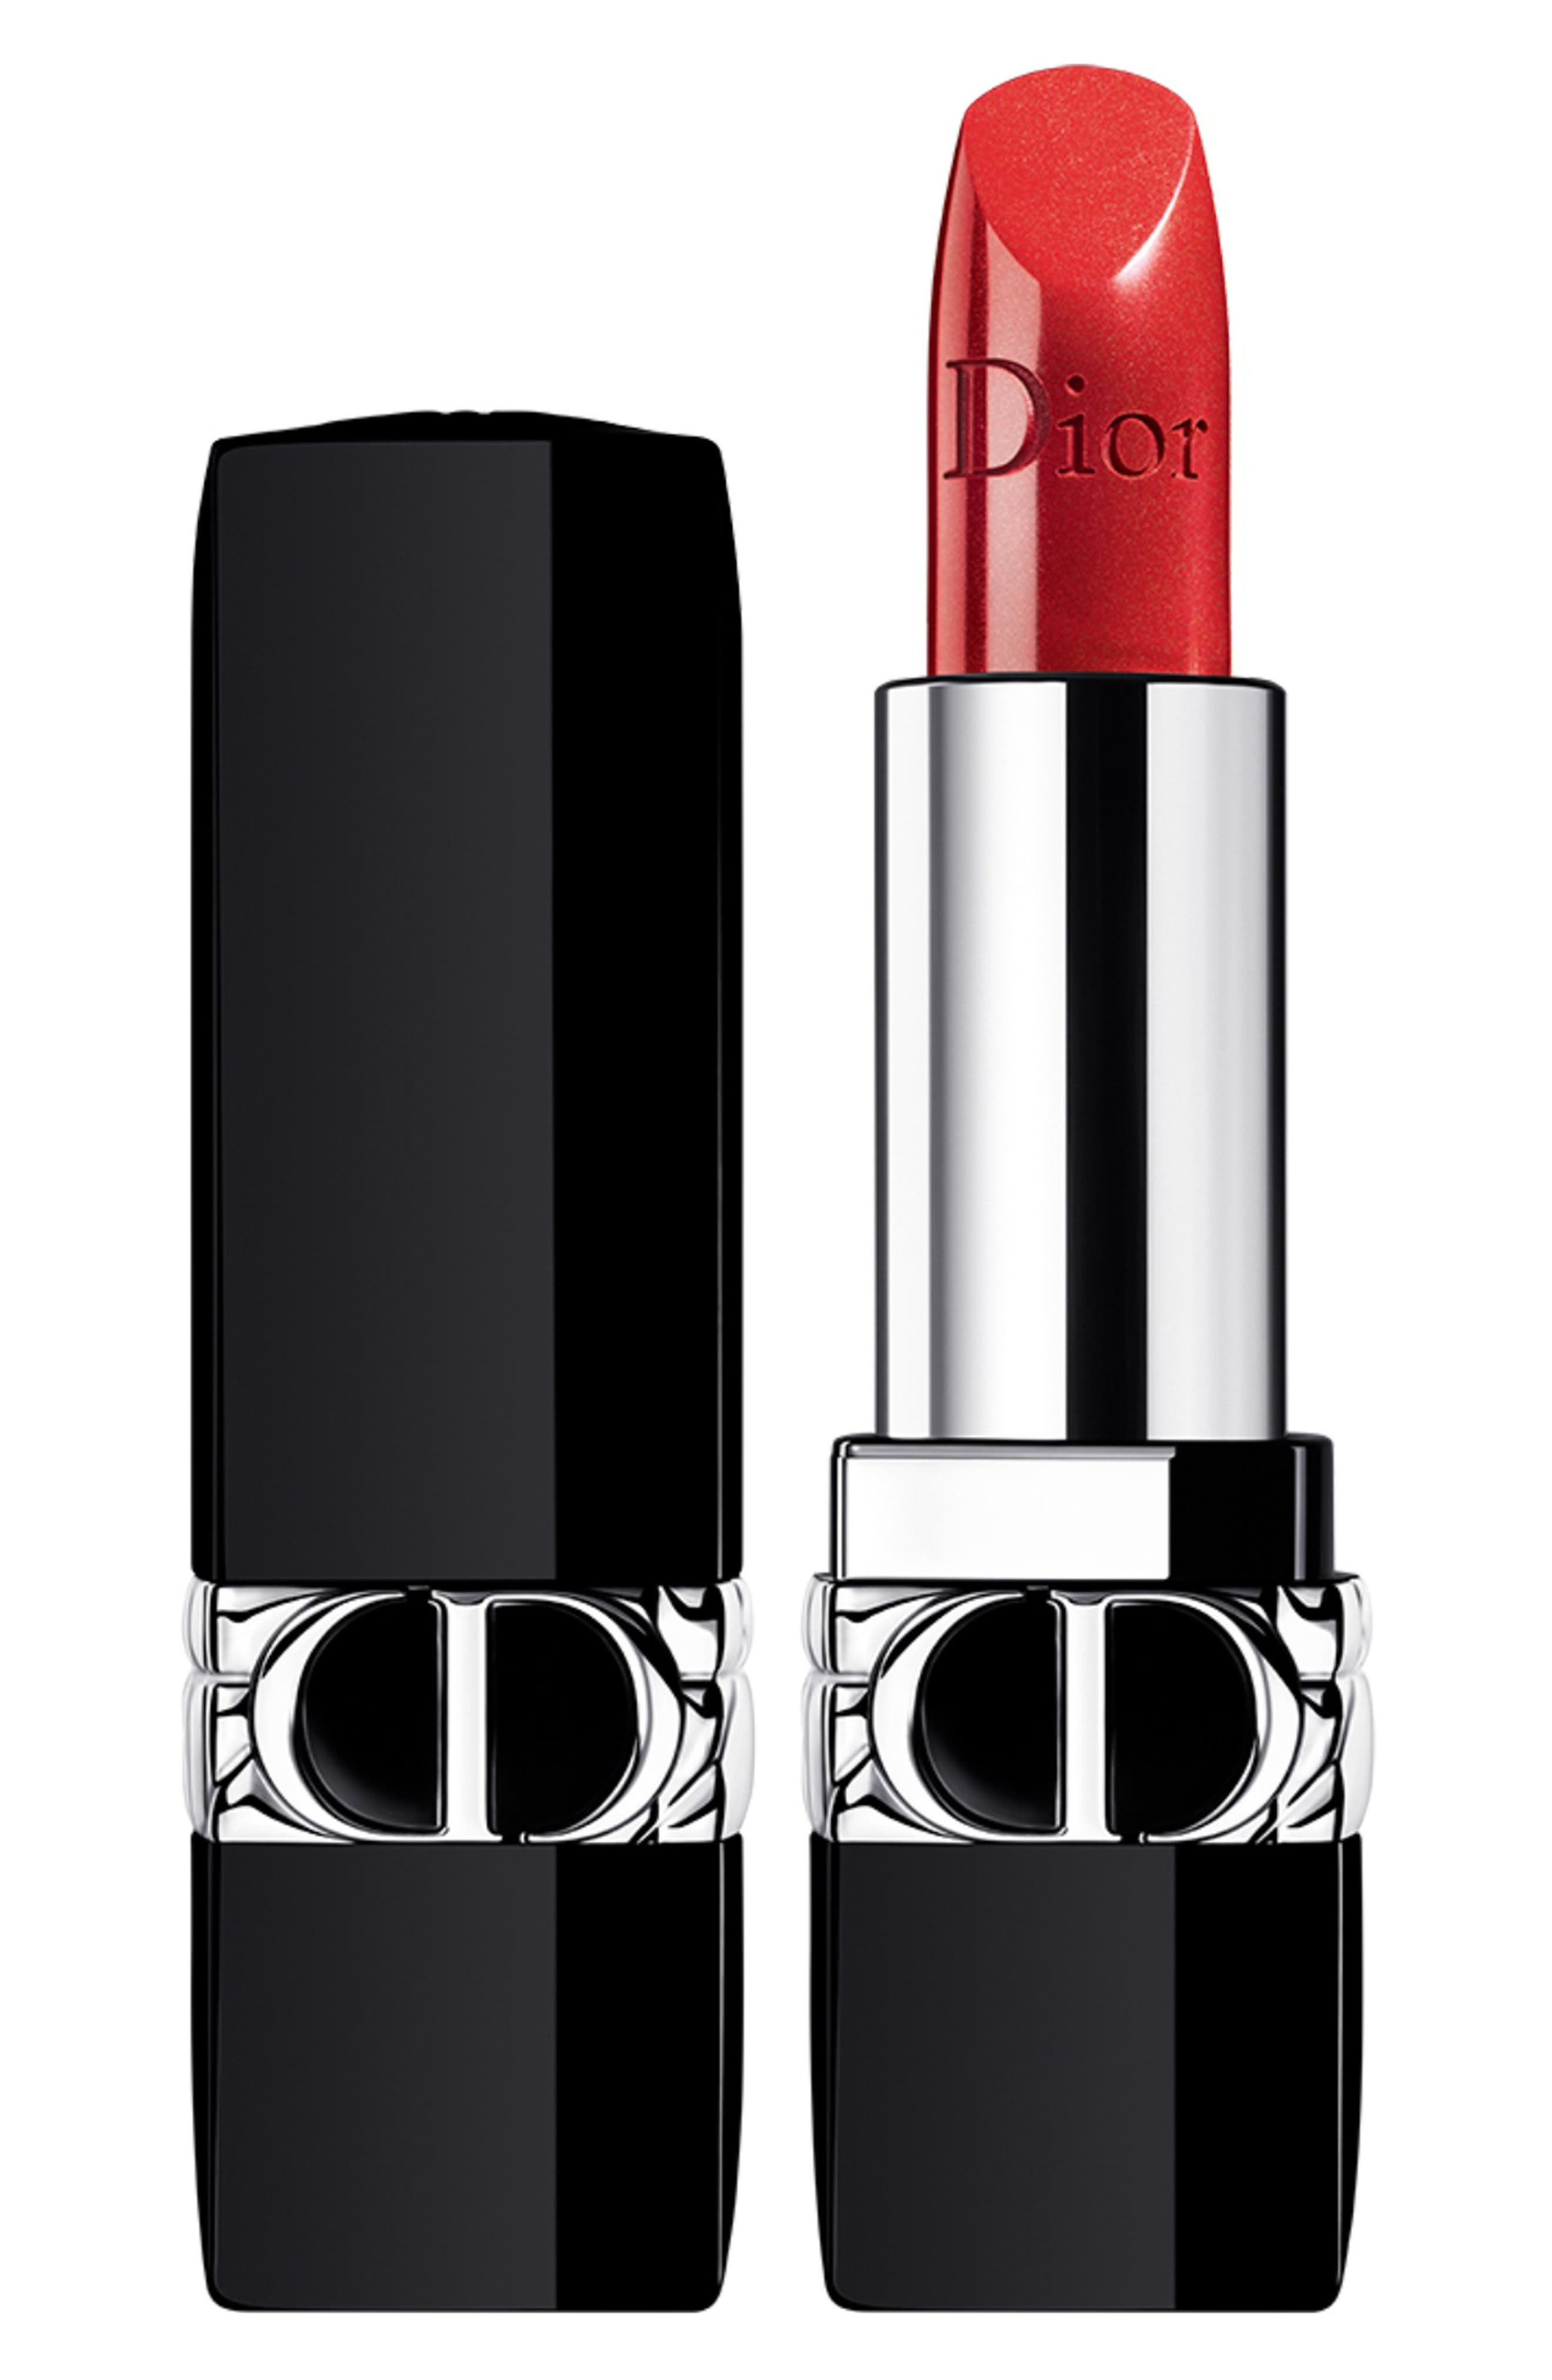 dior pink lipstick